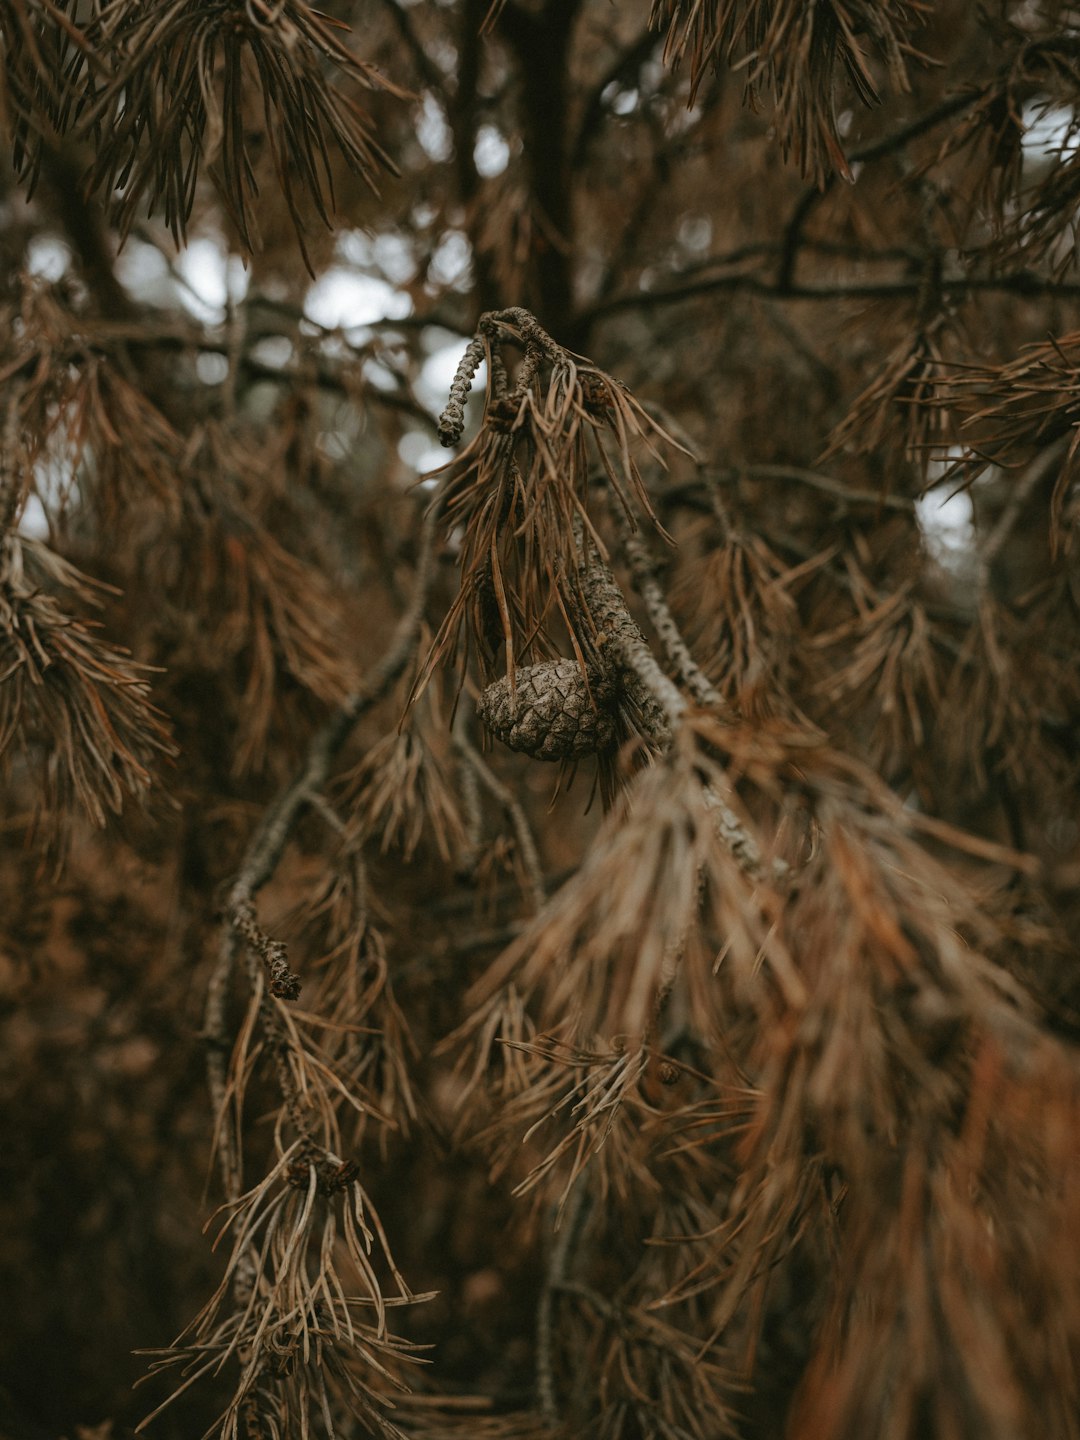 brown pine tree